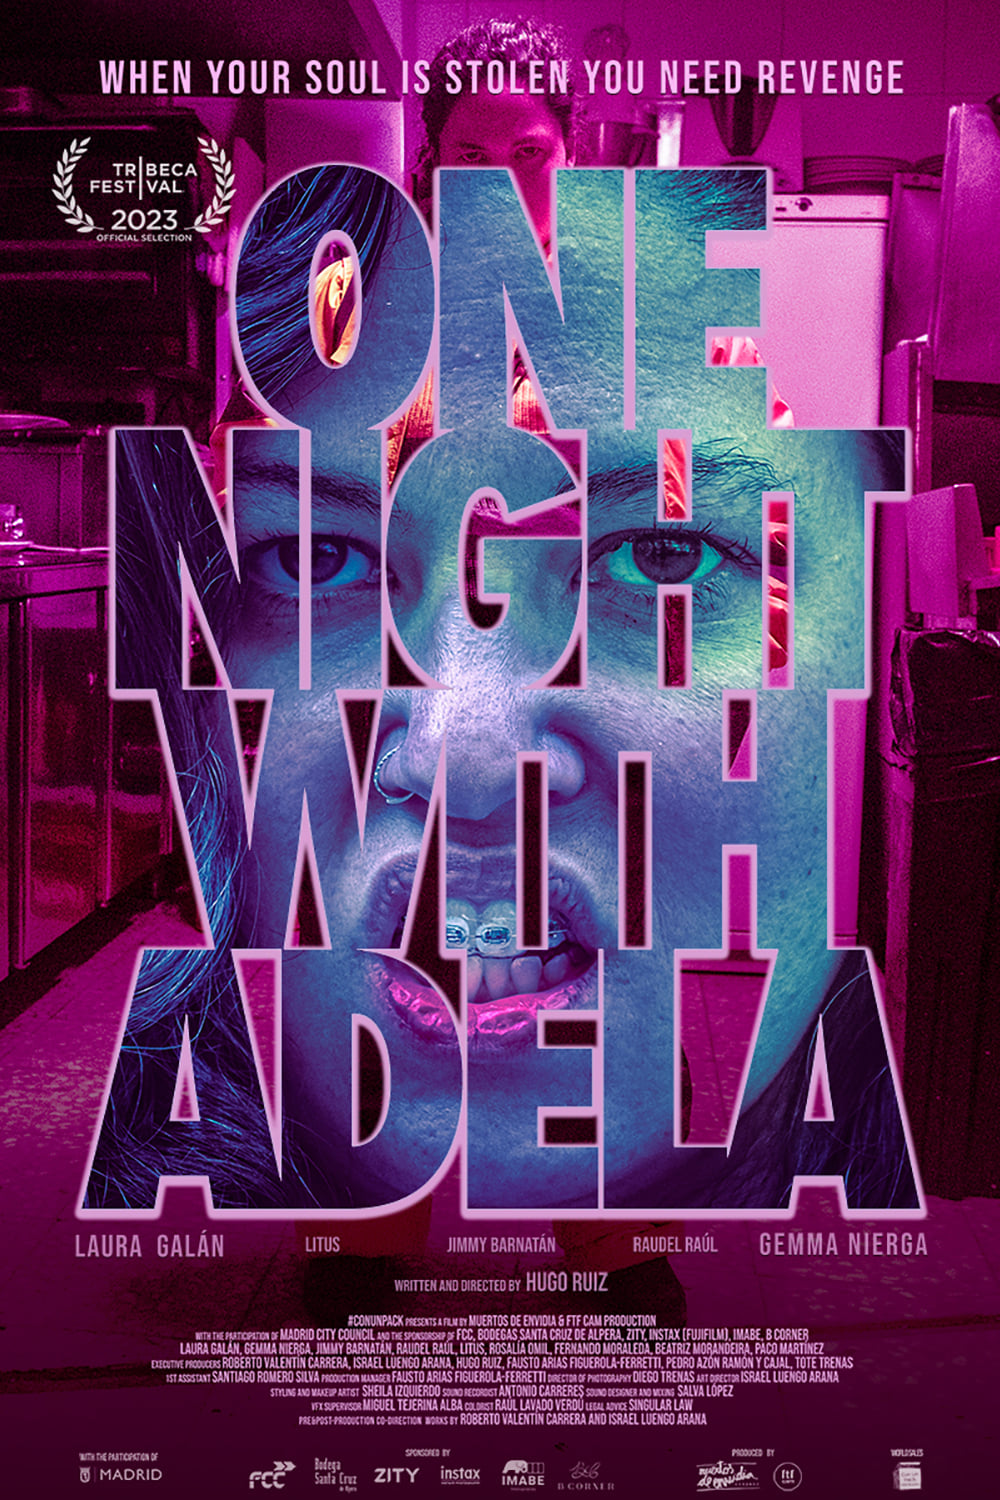 One Night with Adela